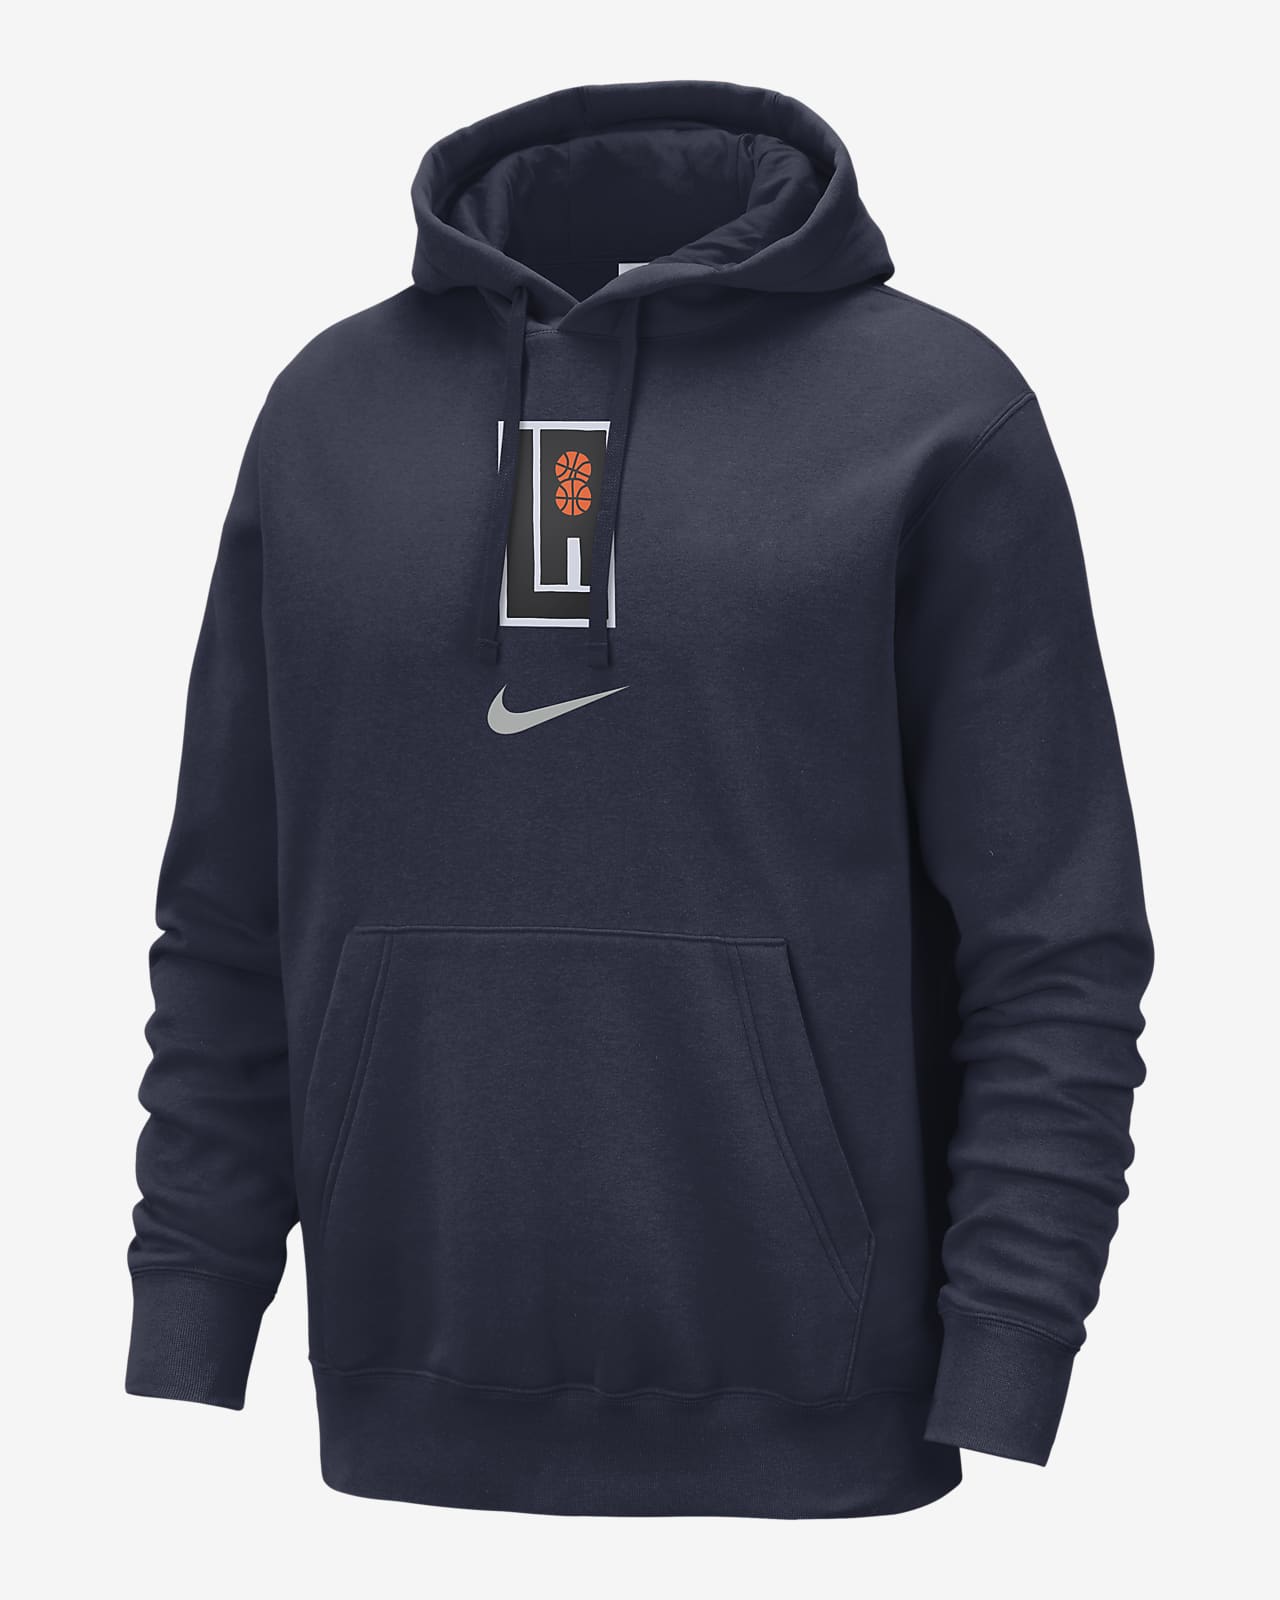 LA Clippers Club Fleece City Edition Nike NBA Kapüşonlu Erkek Sweatshirt'ü